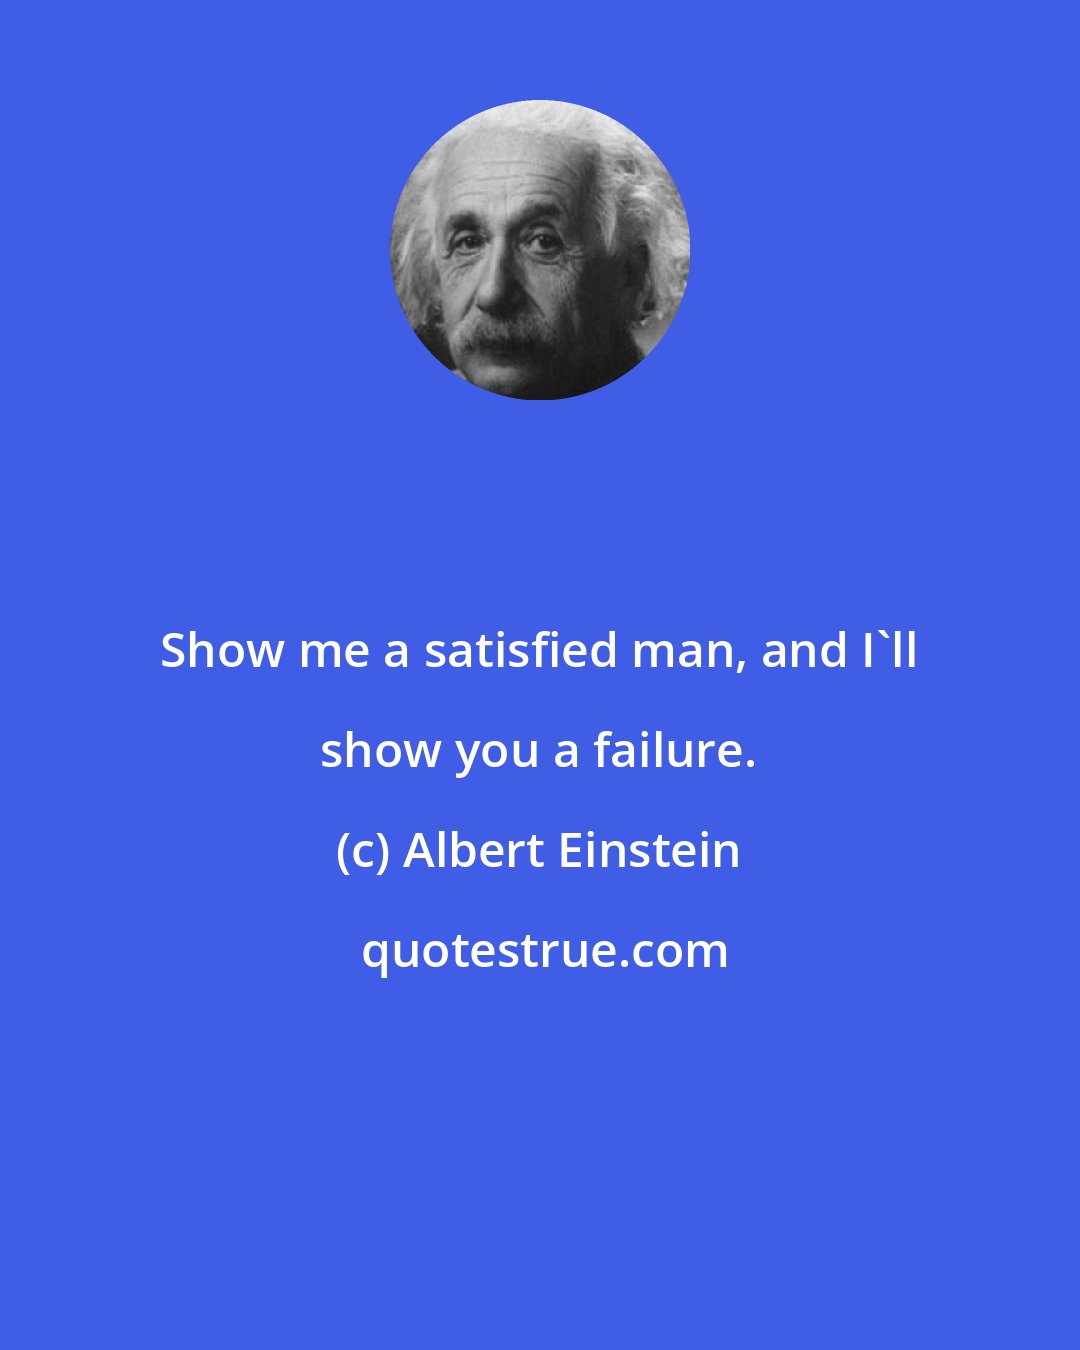 Albert Einstein: Show me a satisfied man, and I'll show you a failure.